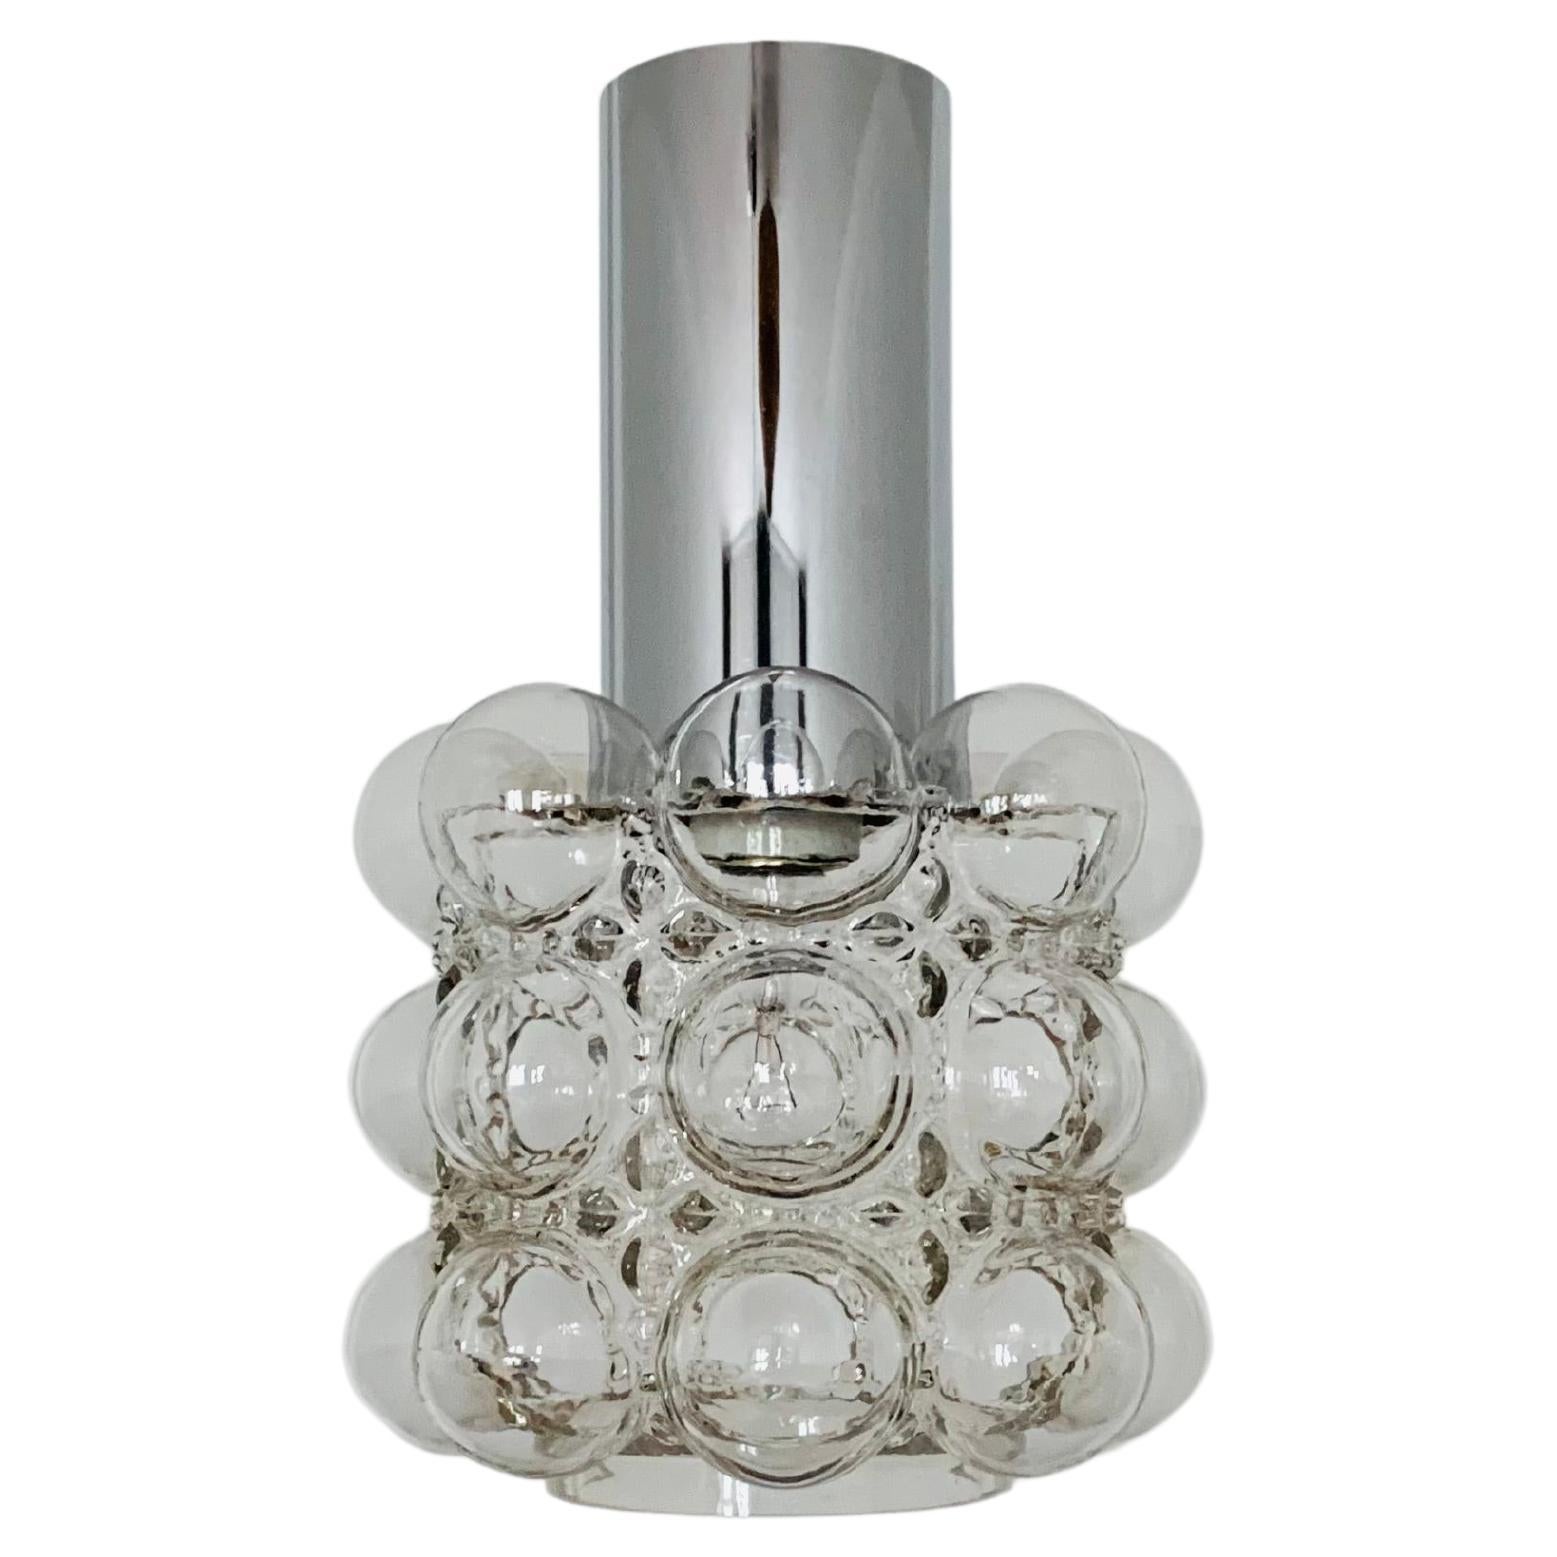 Bubble glass pendant lamp by Helena Tynell for Glashütte Limburg